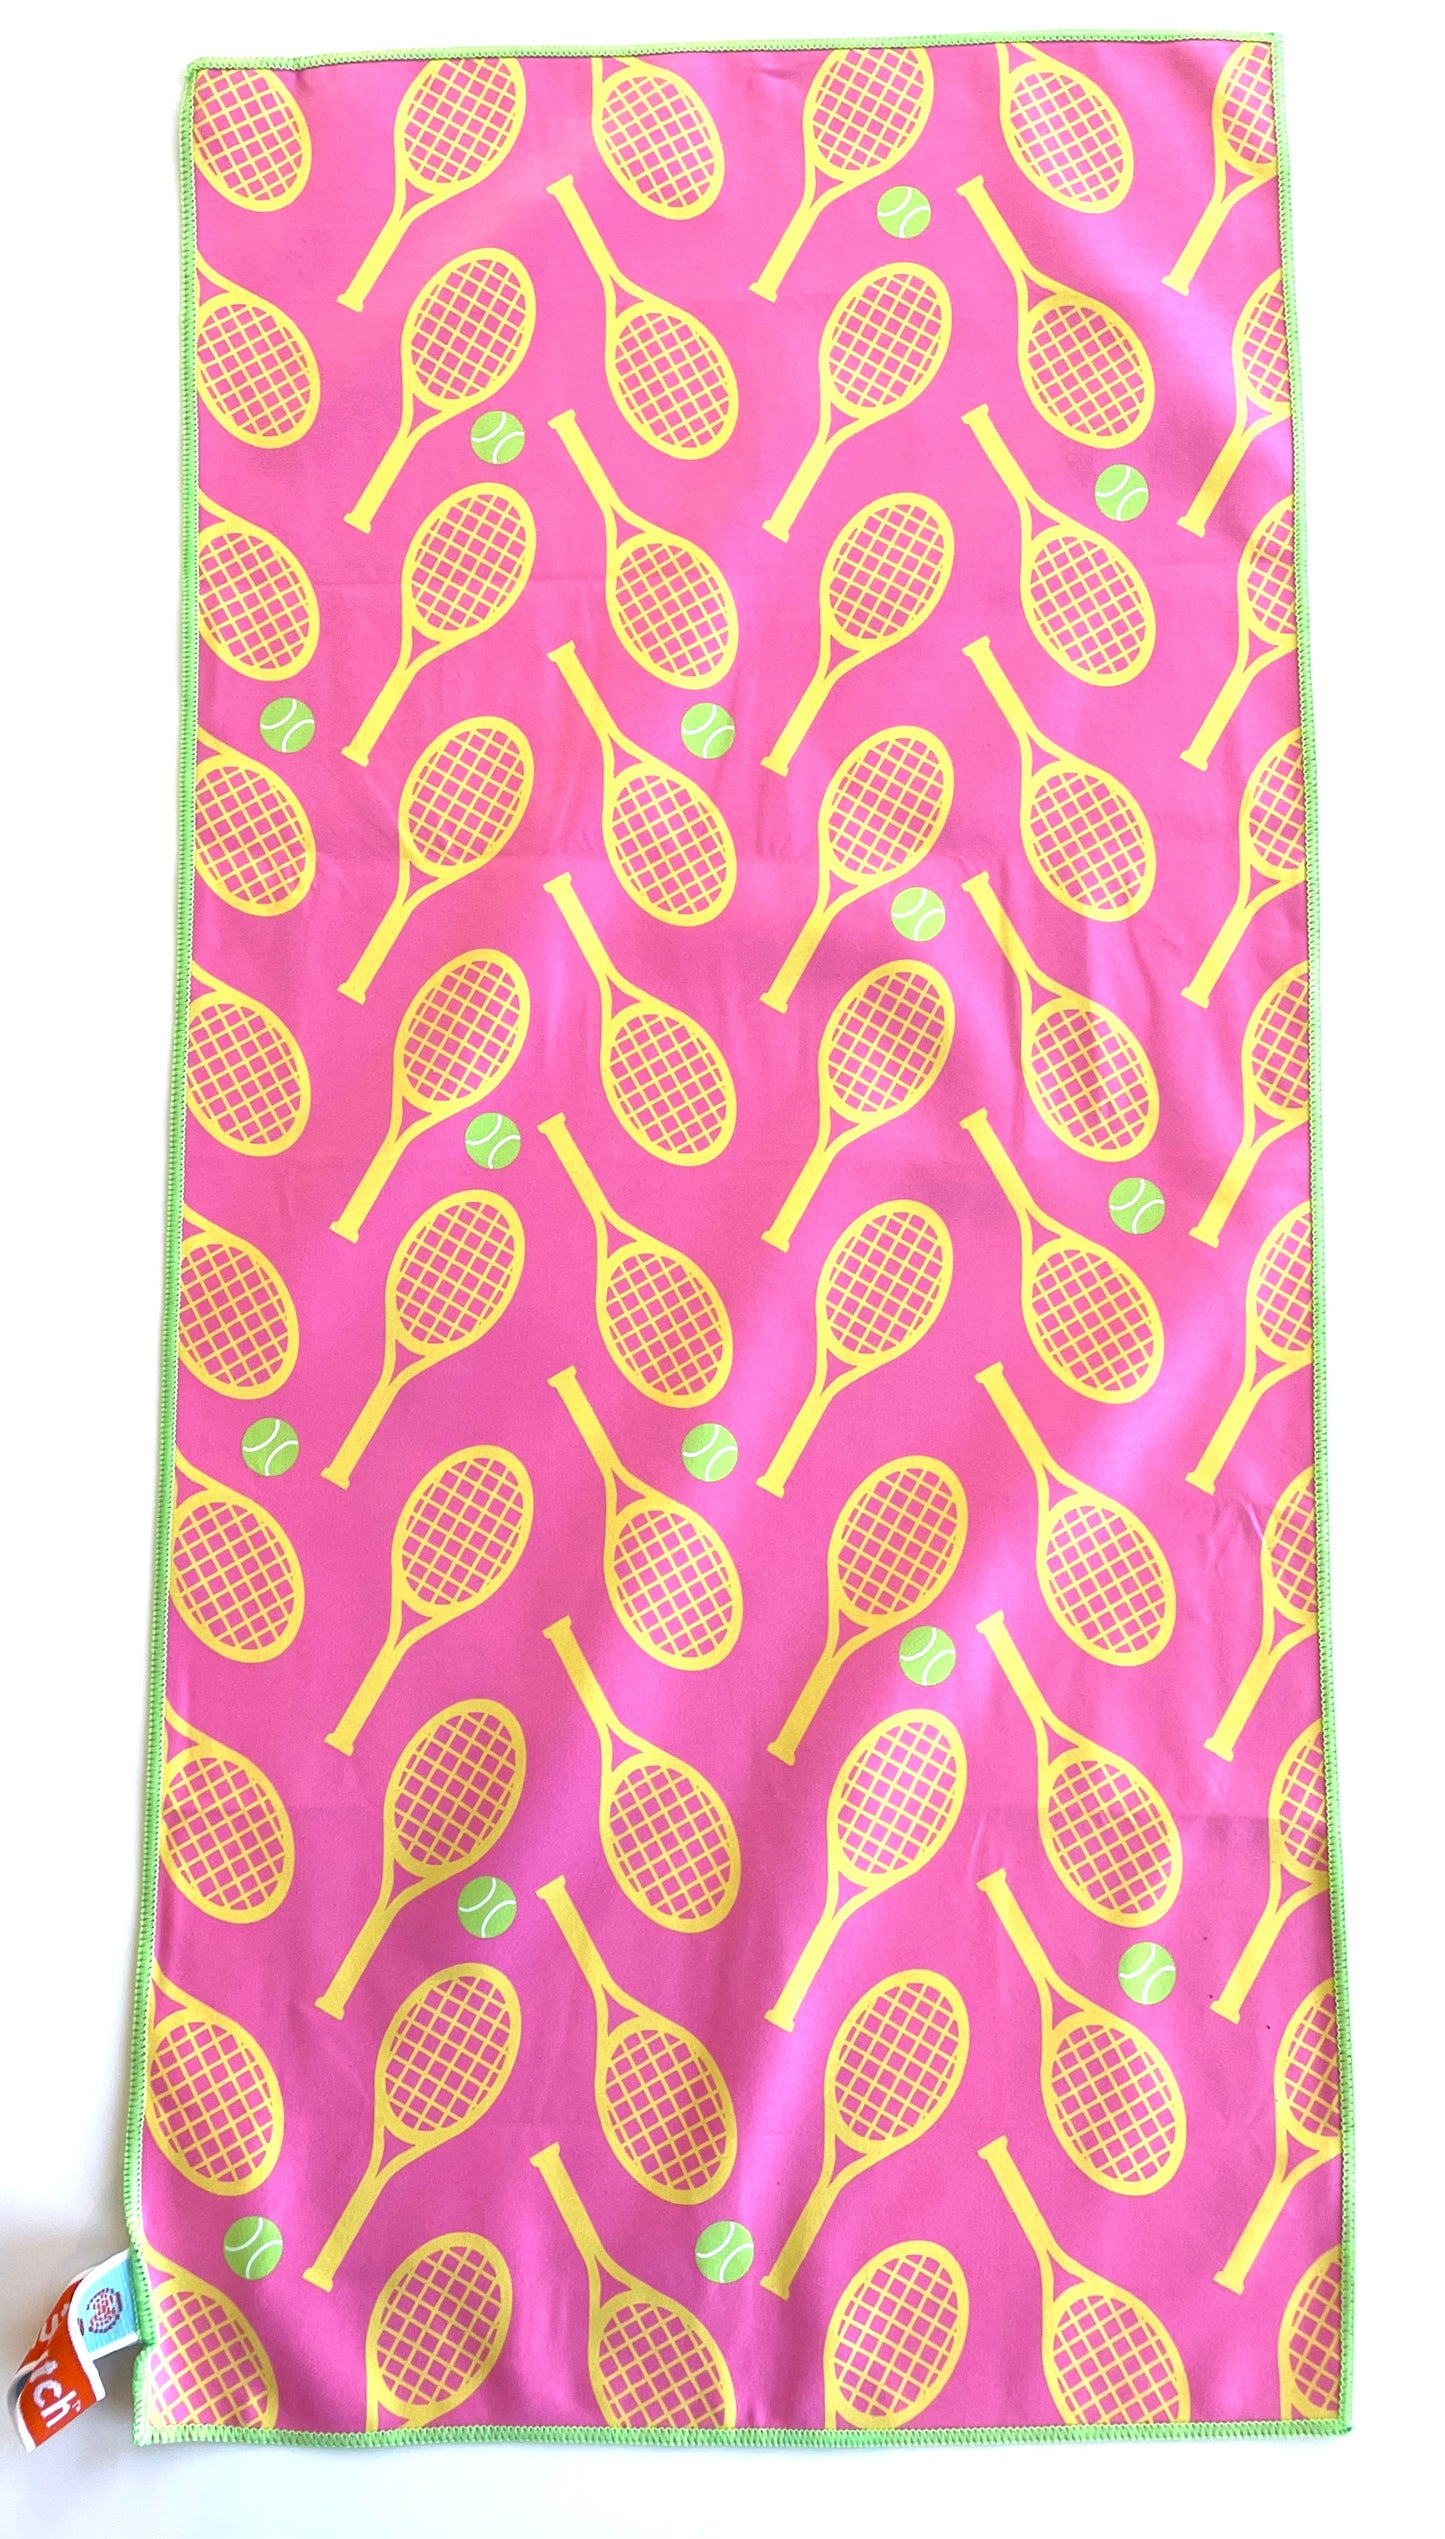 In the Pink Tennis Towel